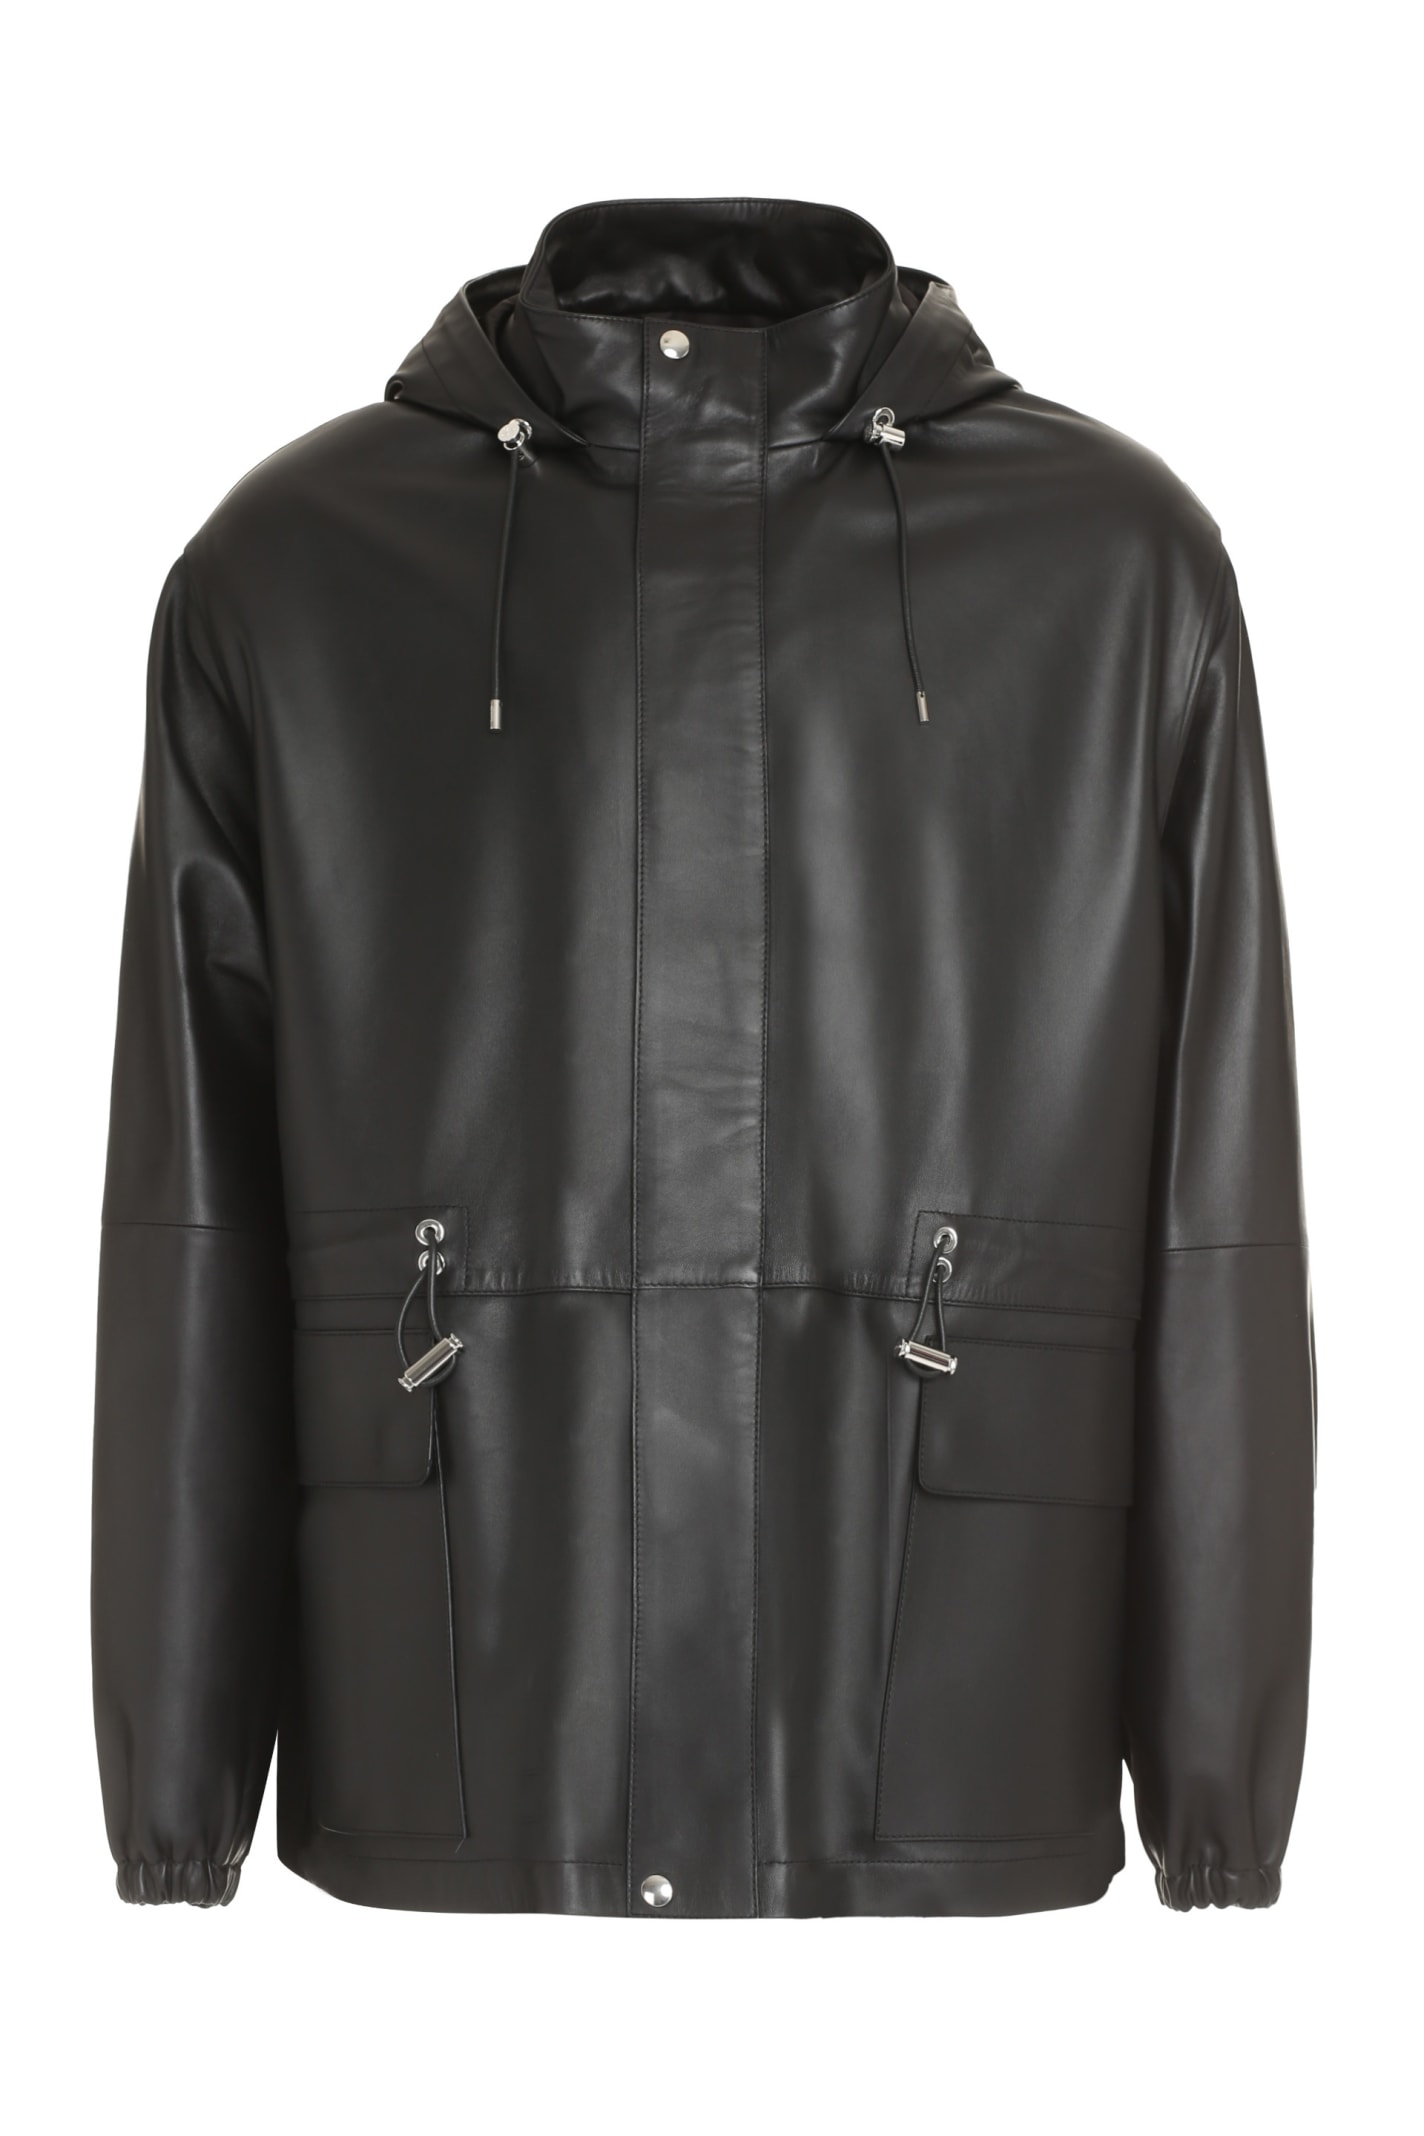 Loewe Hooded Leather Jacket